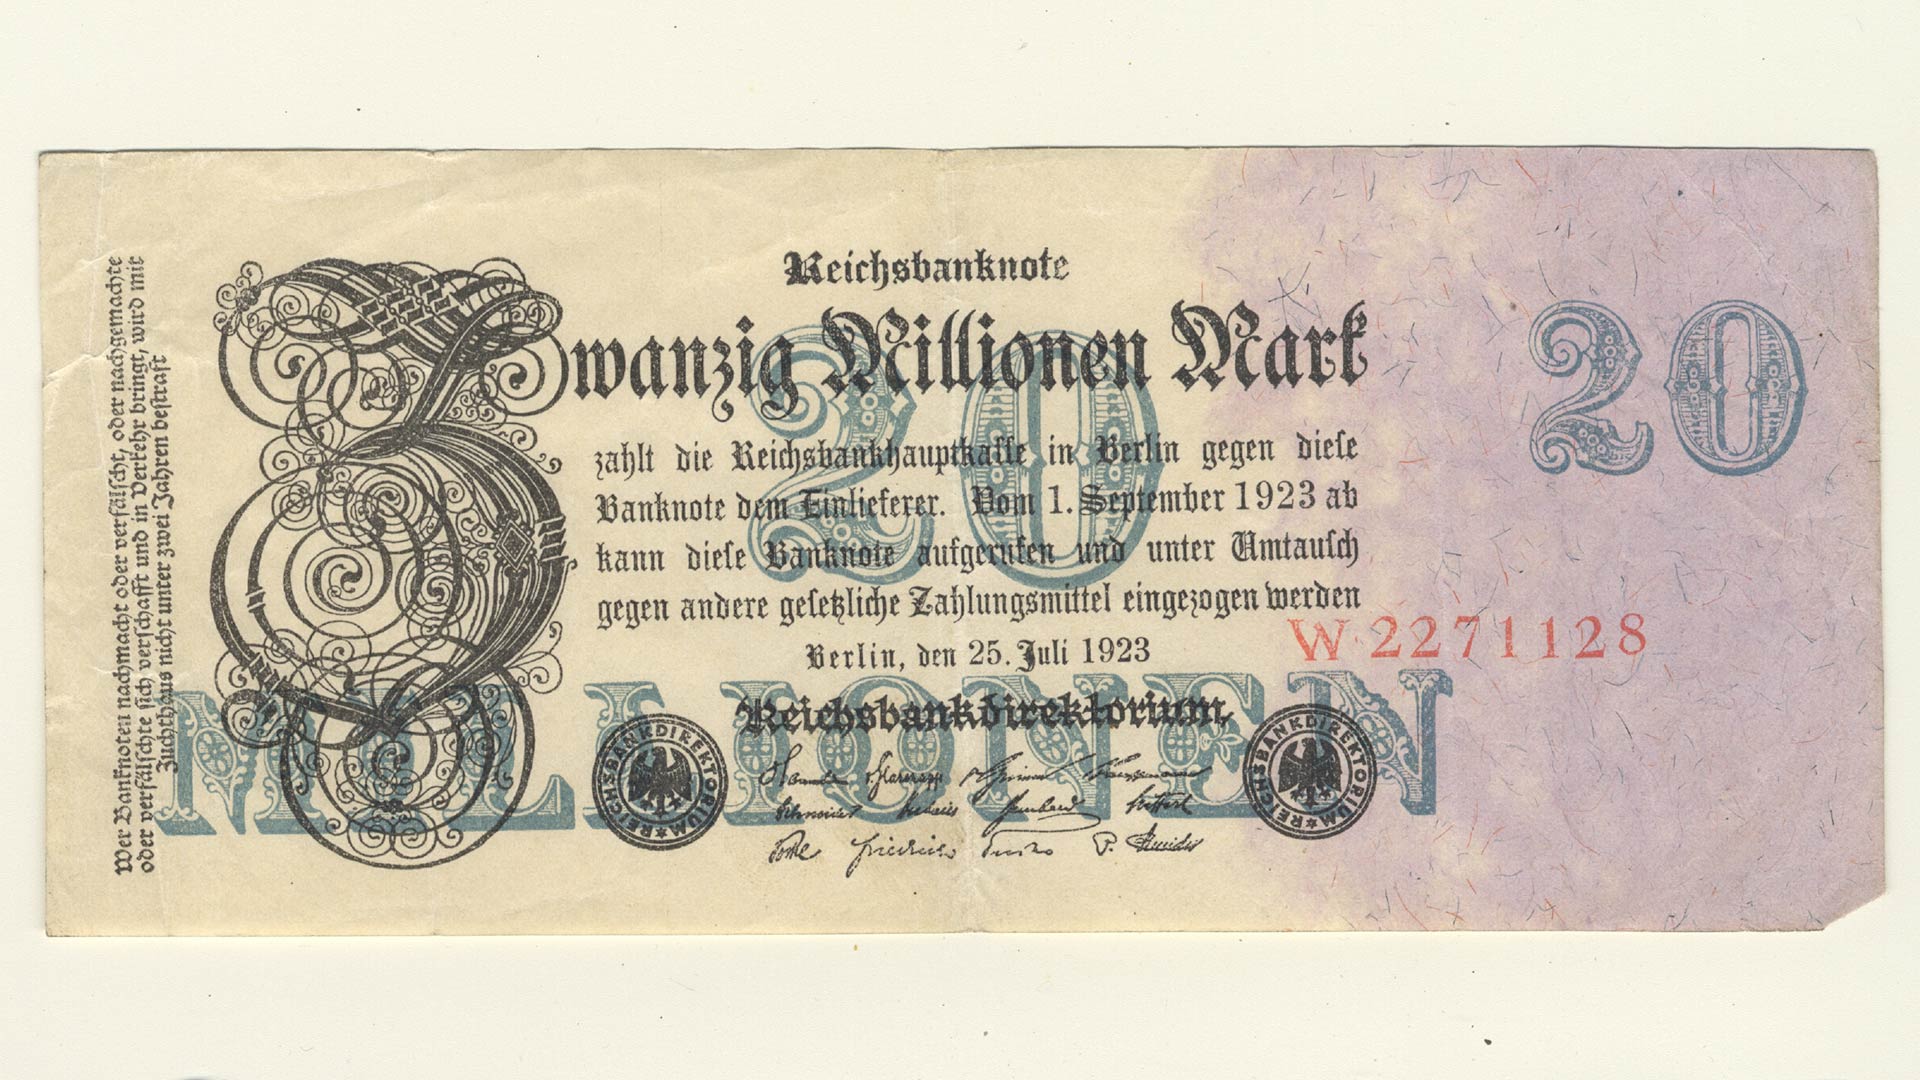 stacks of 1920s money